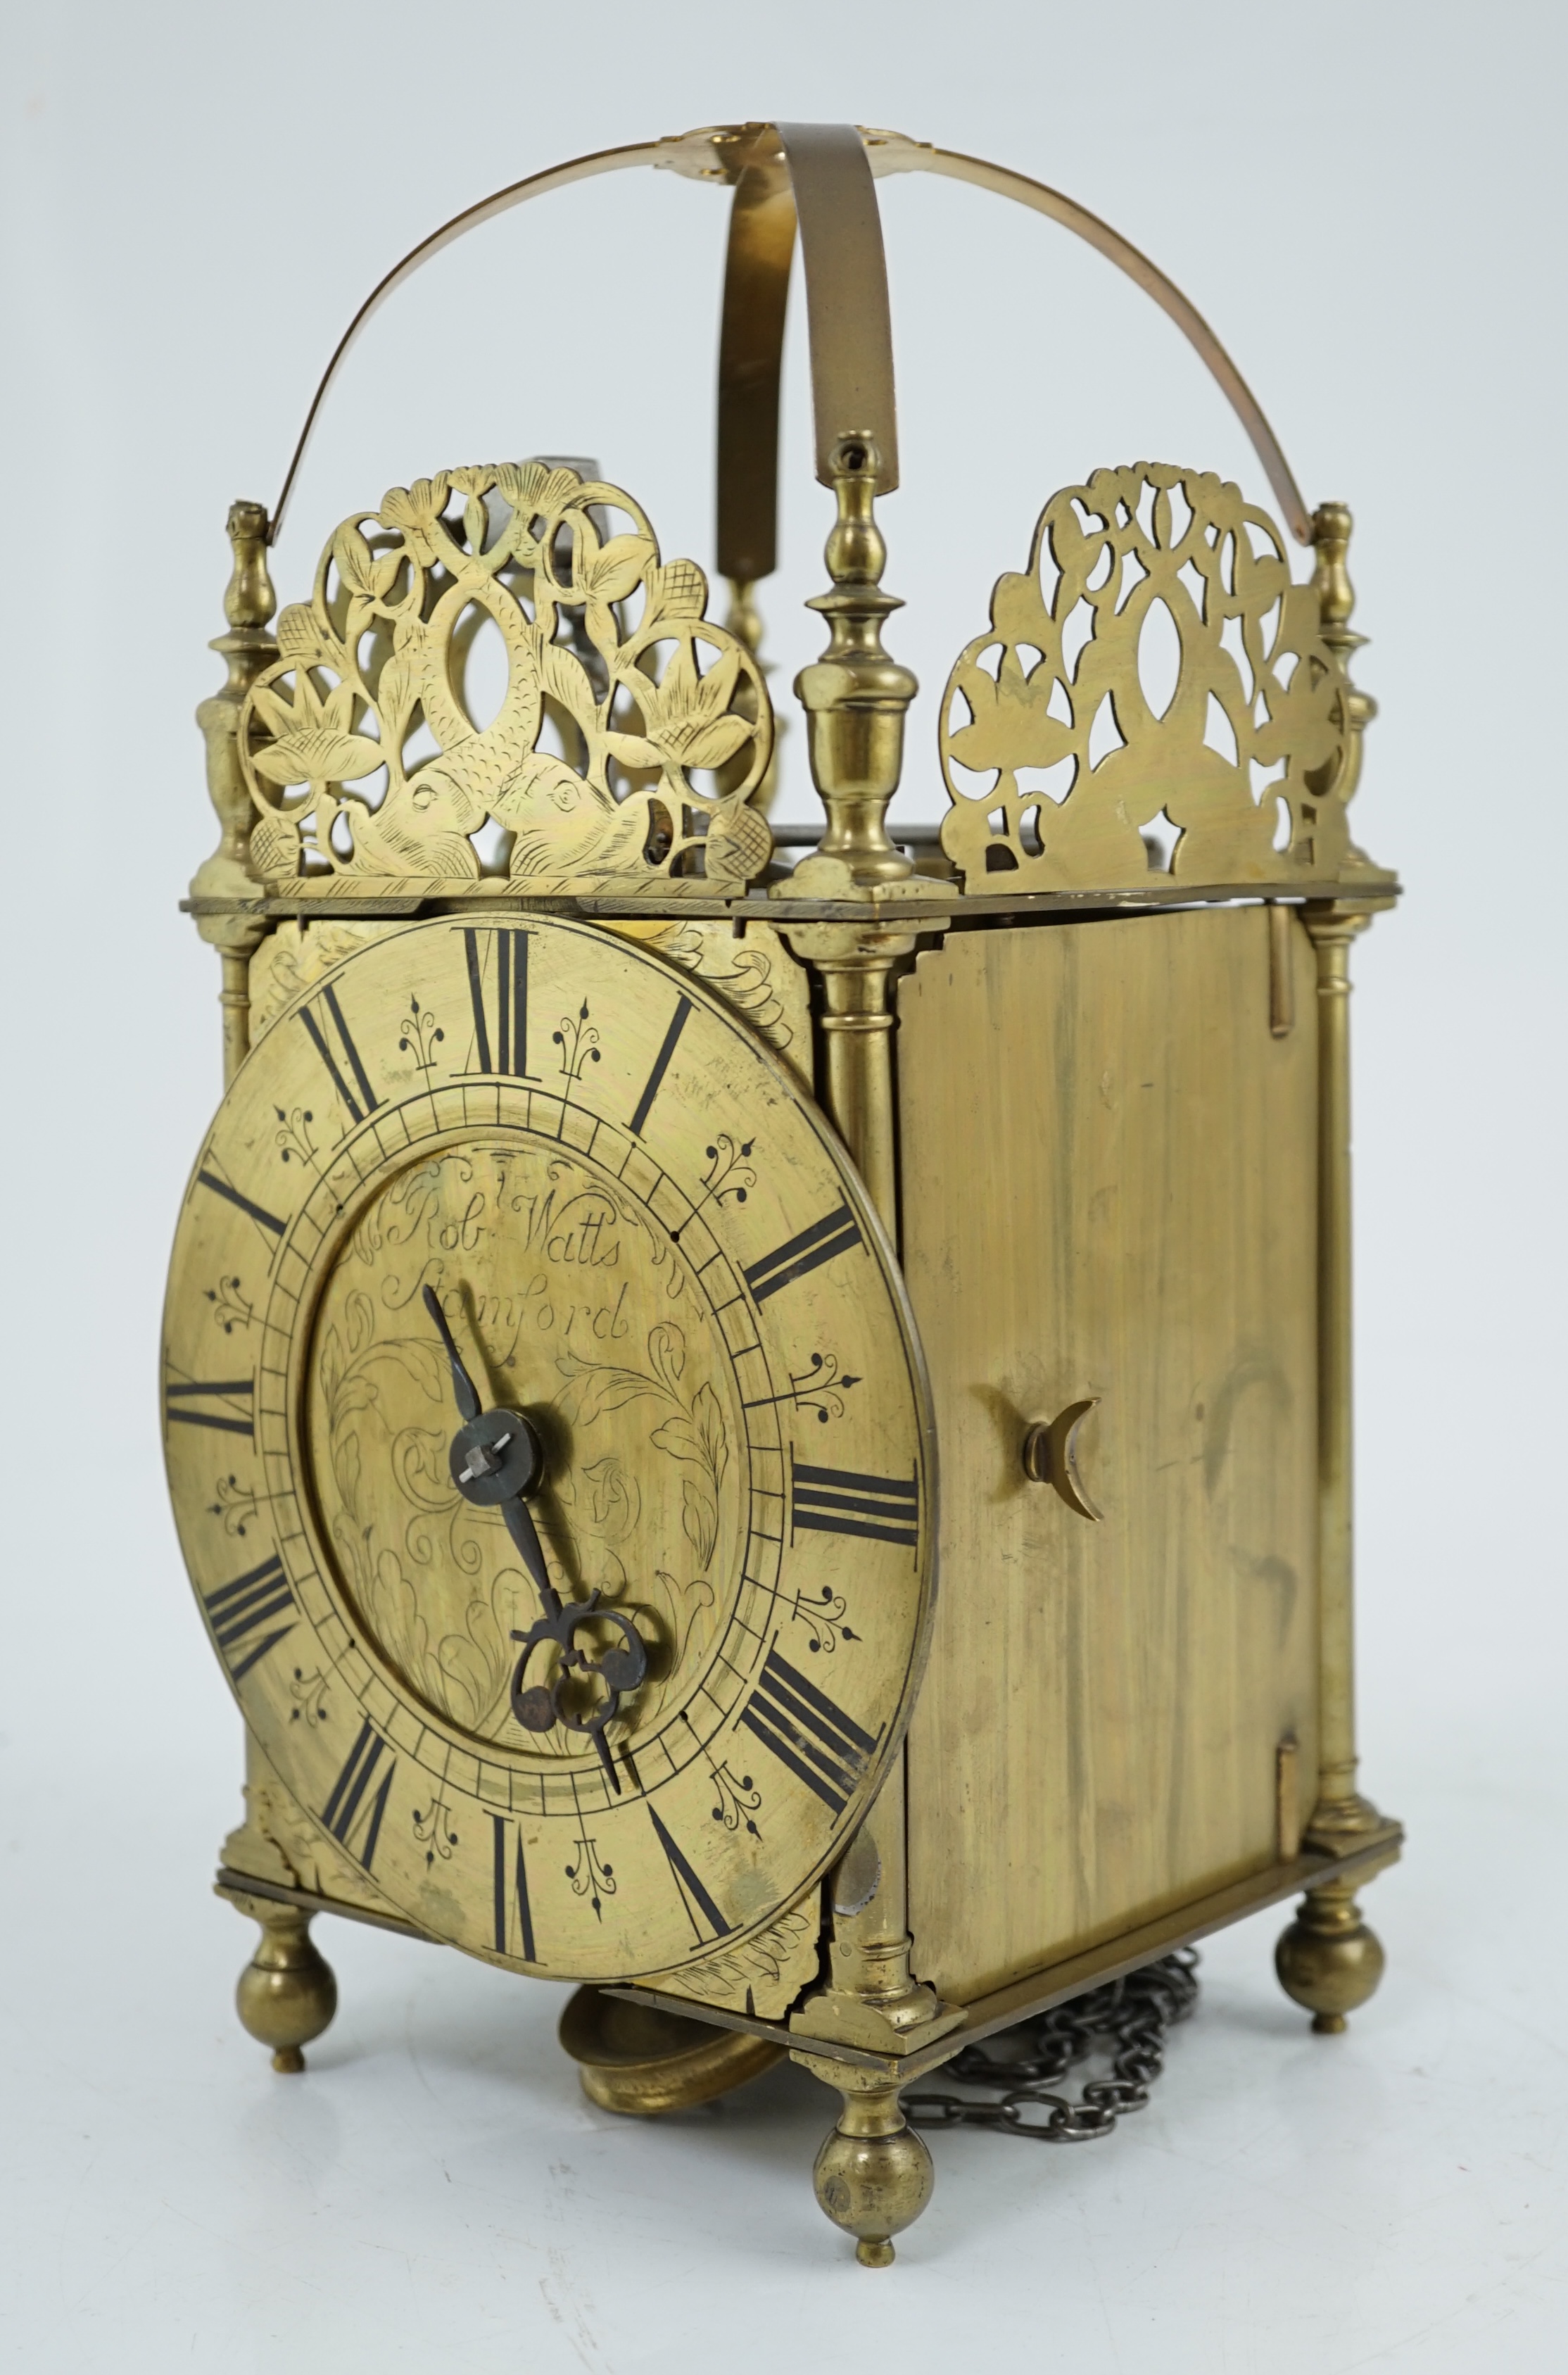 Robert Watts of Stamford, an early 18th century brass lantern clock